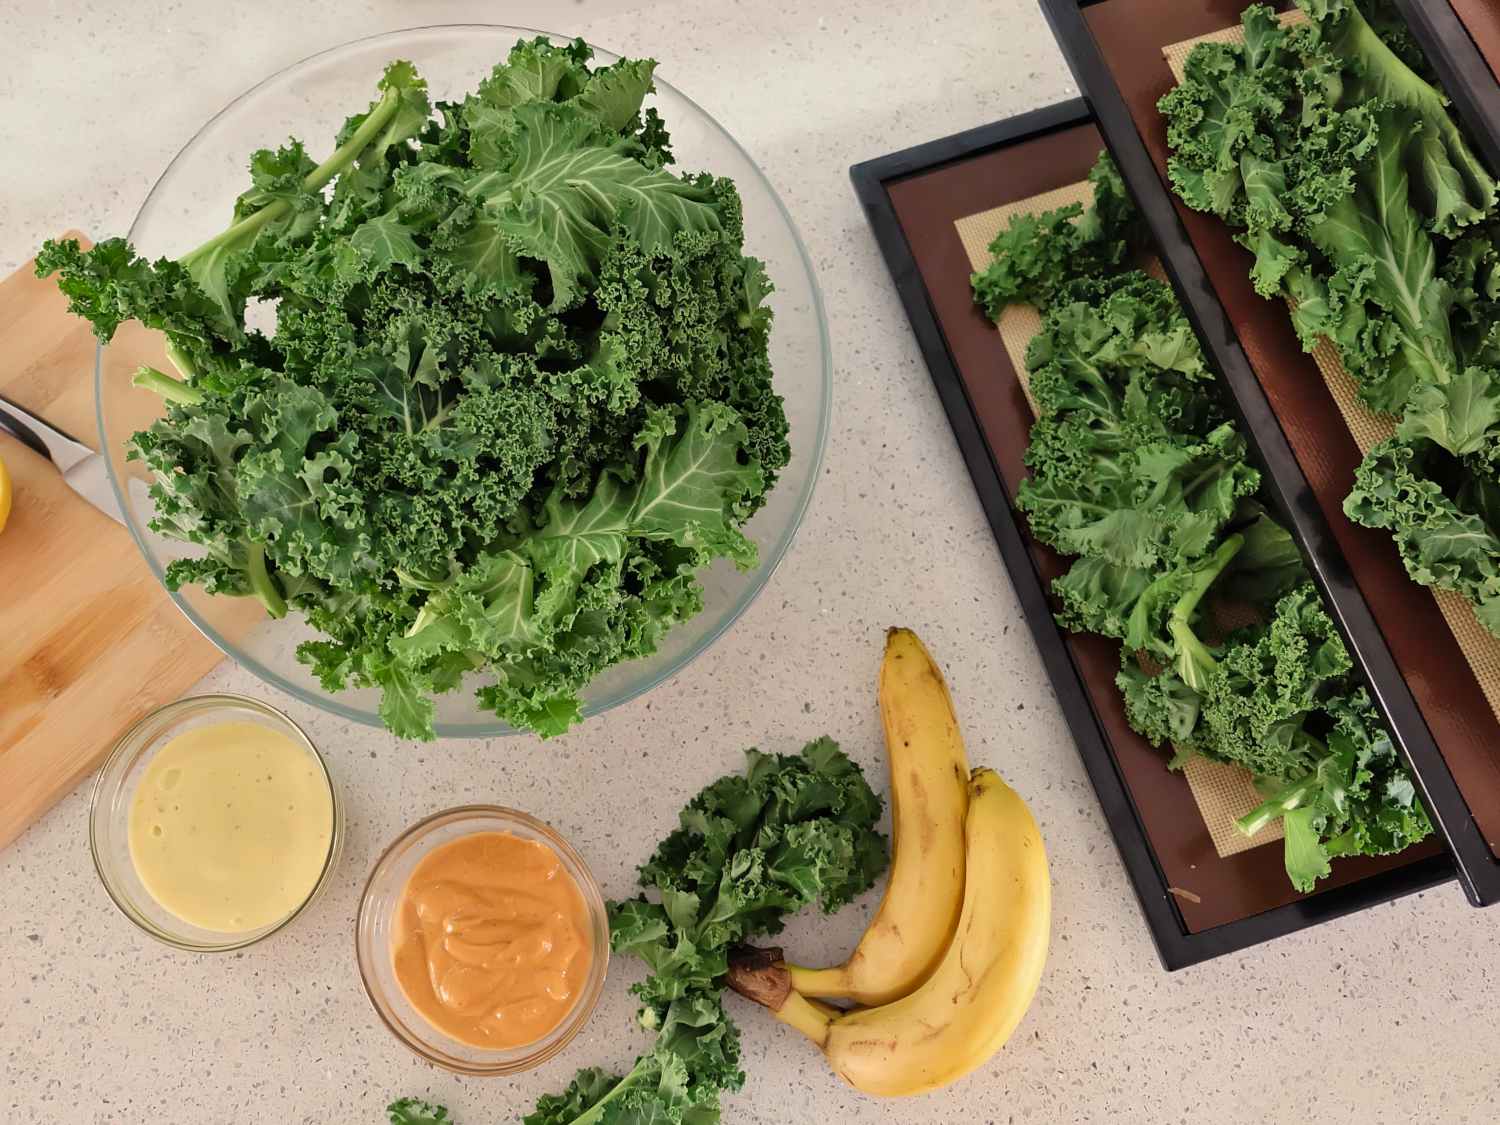 Benefits of kale